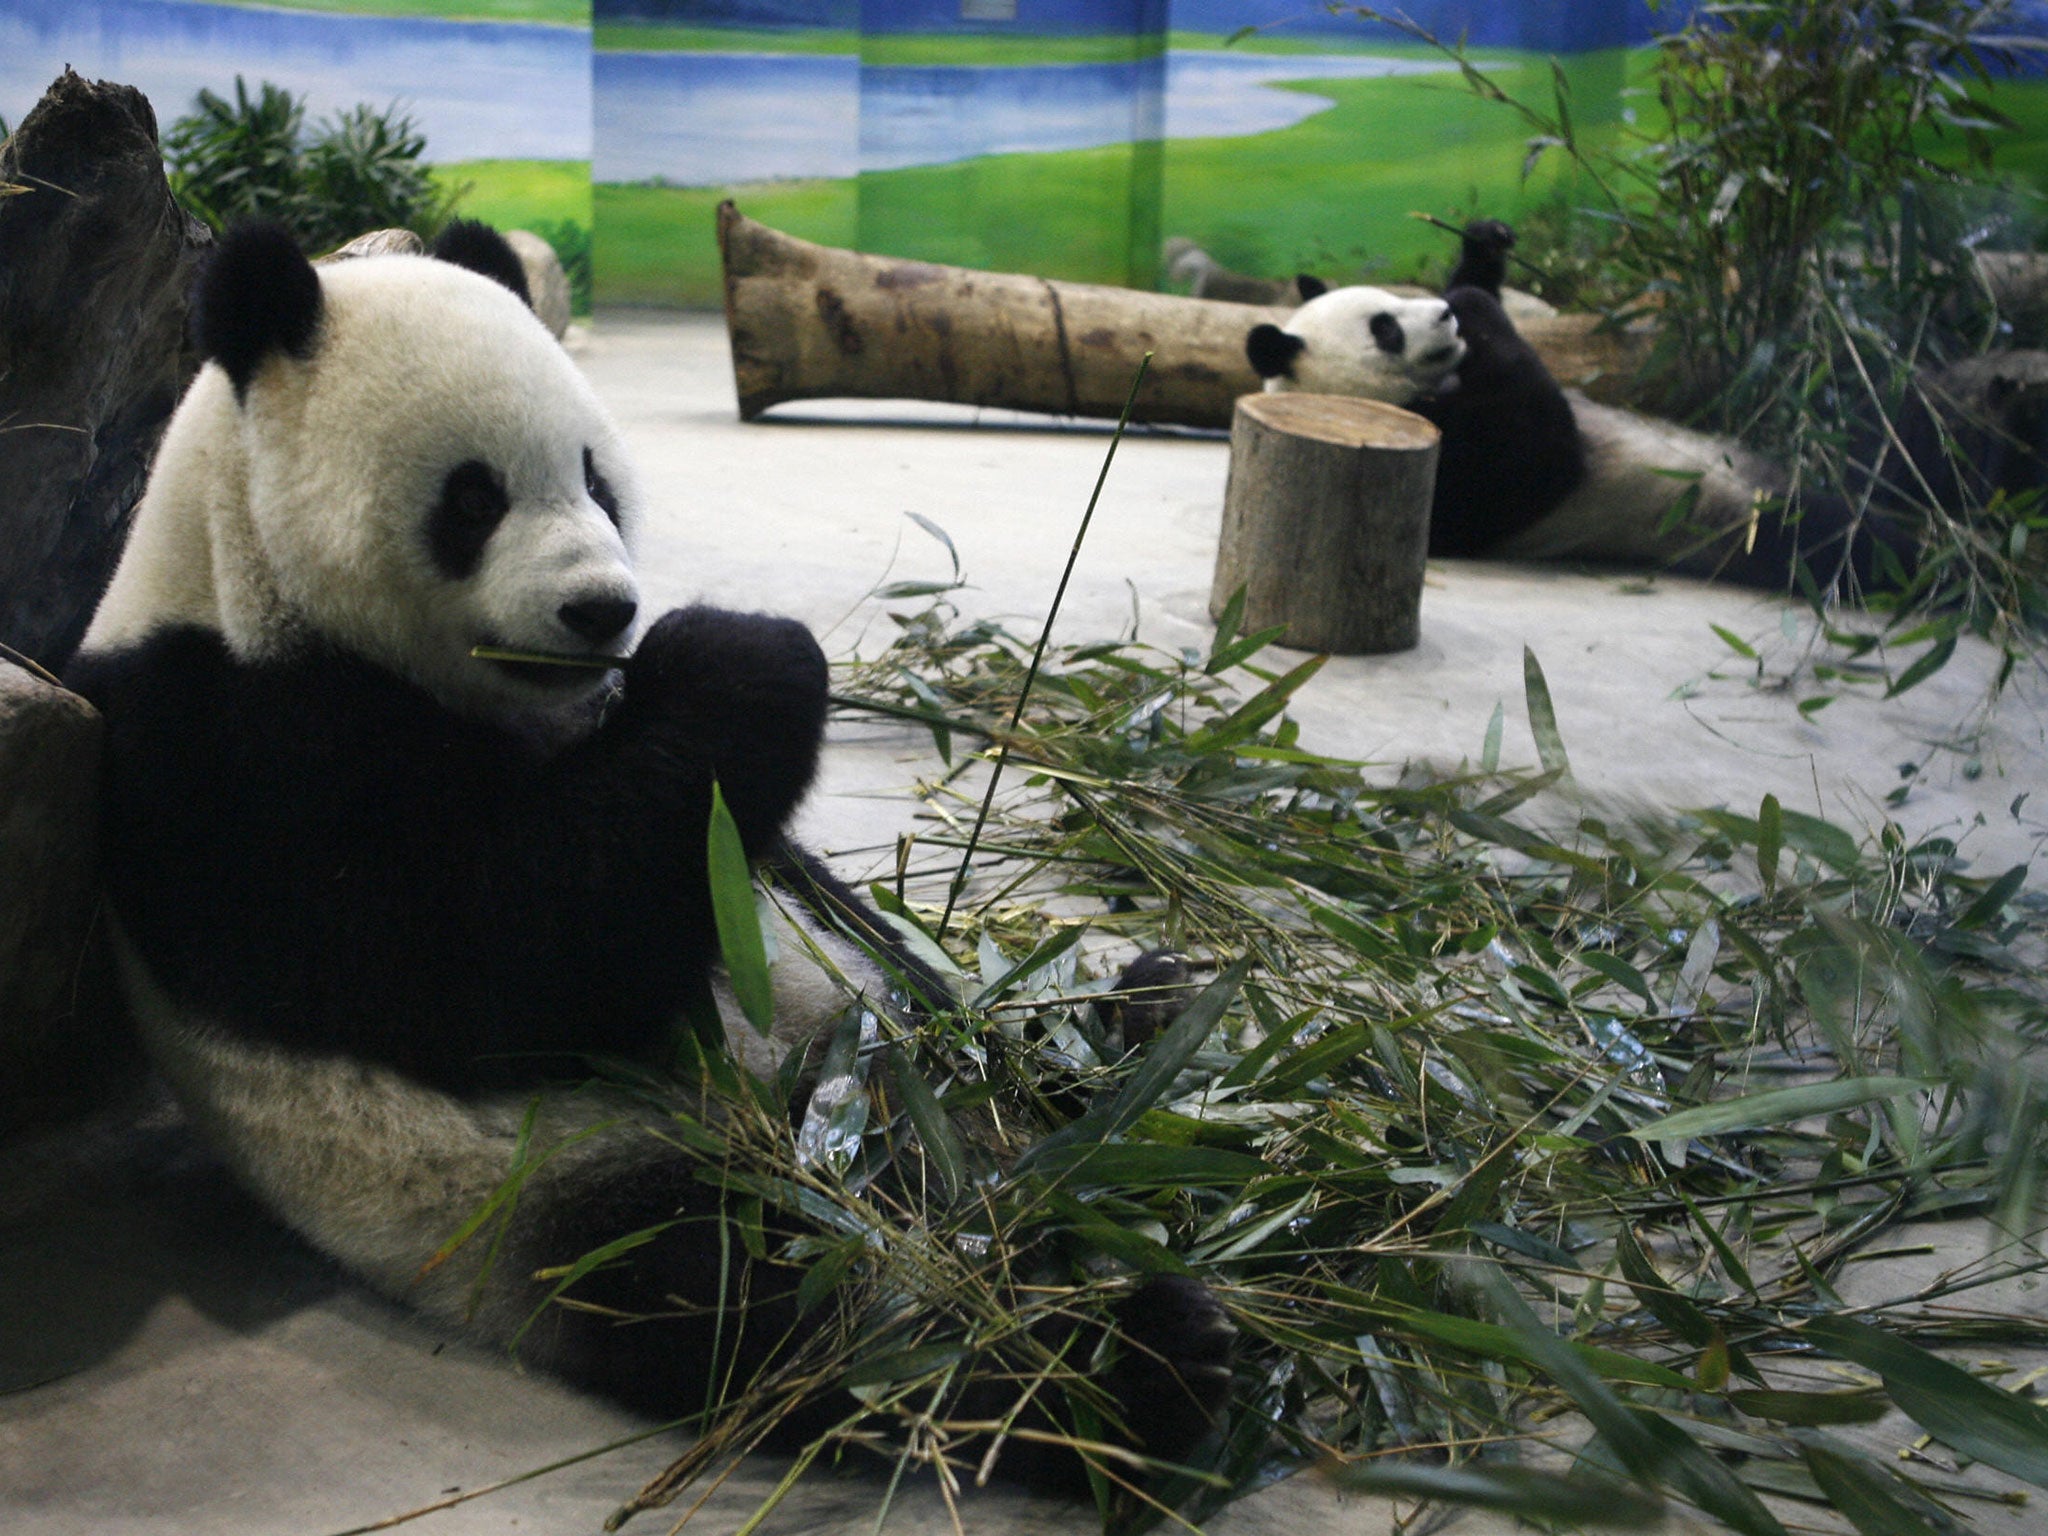 FILE: Tuan Tuan and Yuan Yuan eat bamboo leaves inside their new enclosure at the Taipei Zoo on January 26, 2009